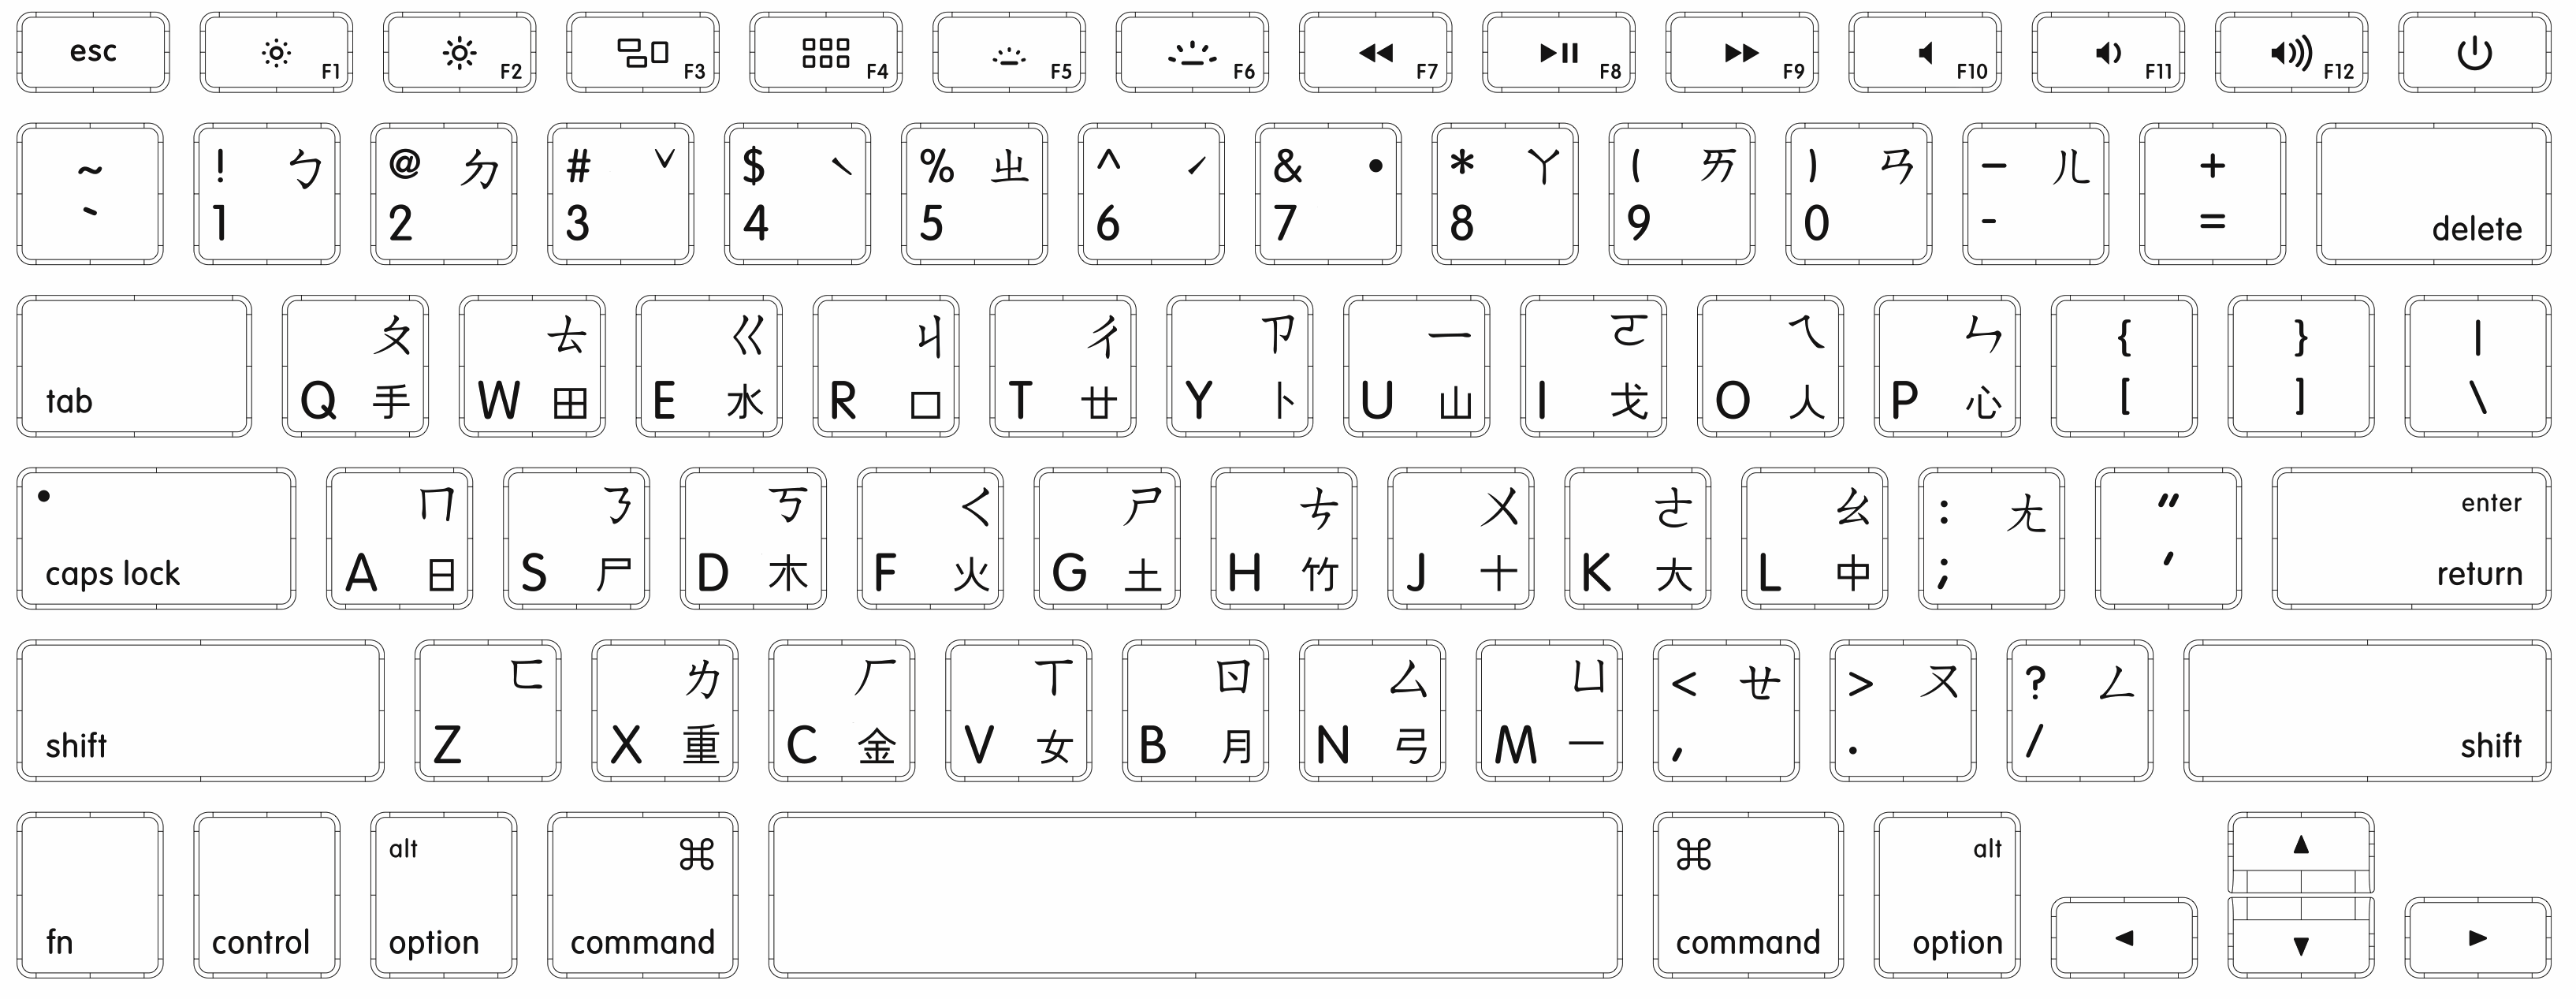 Apple us keyboard layout symbols